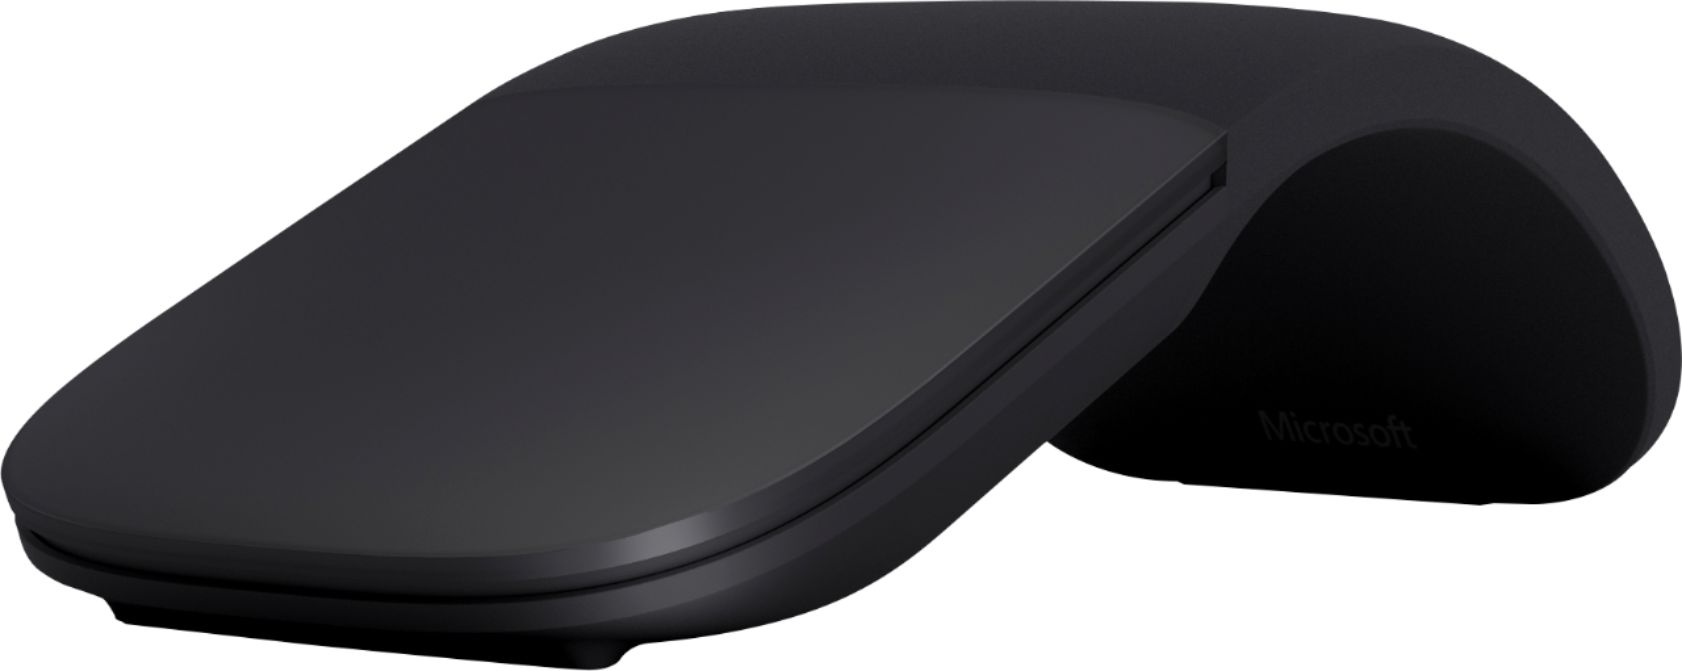 Microsoft Arc Wireless BlueTrack Ambidextrous Mouse Black ELG-00001 Buy